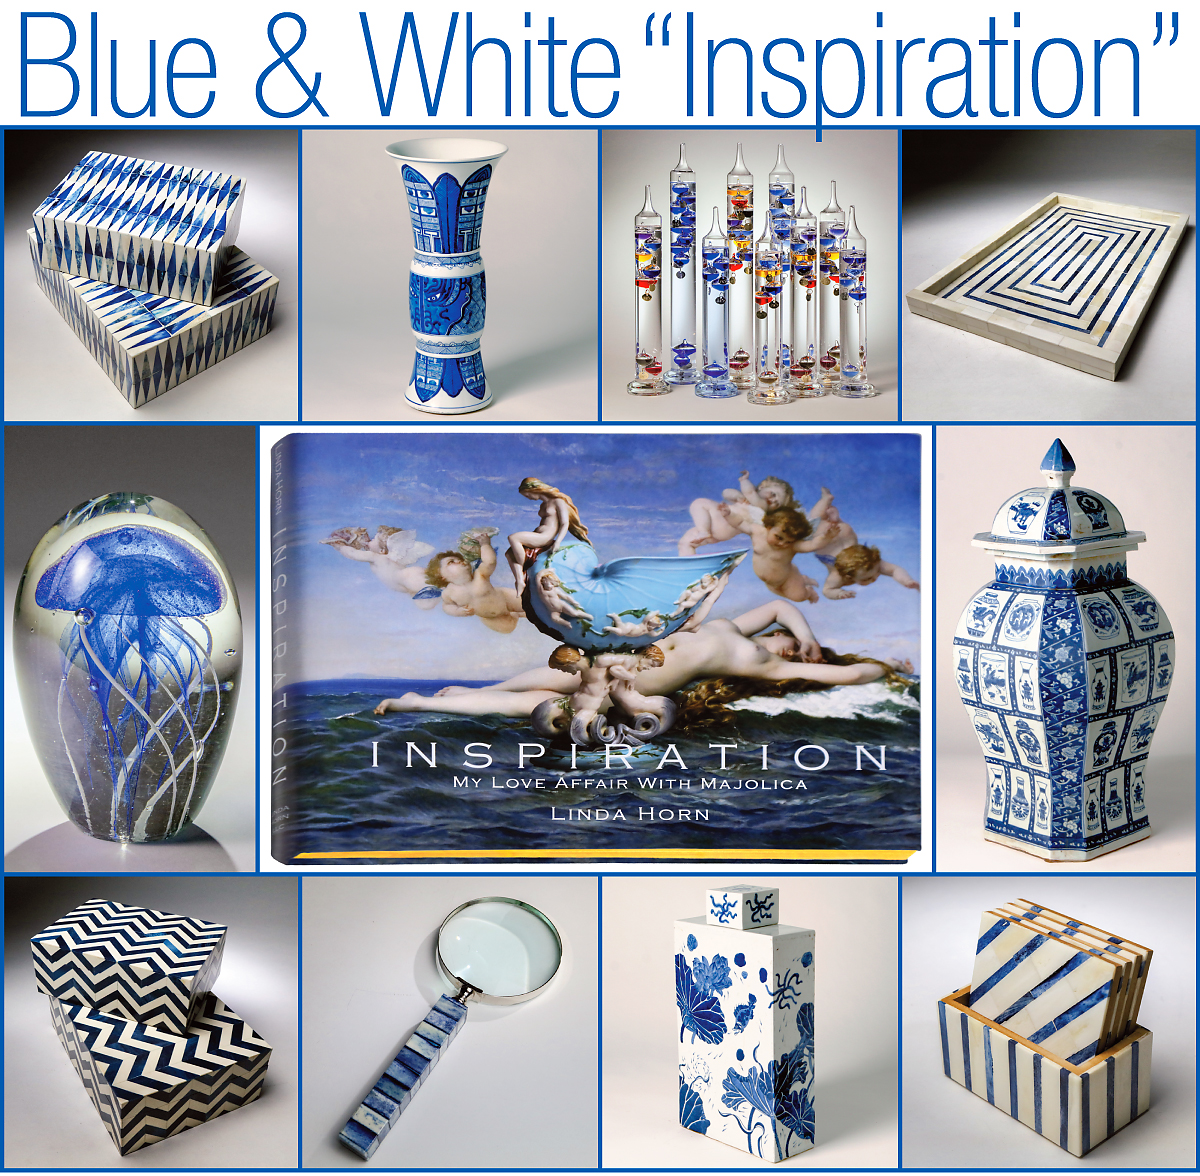 Blue & White "Inspiration"